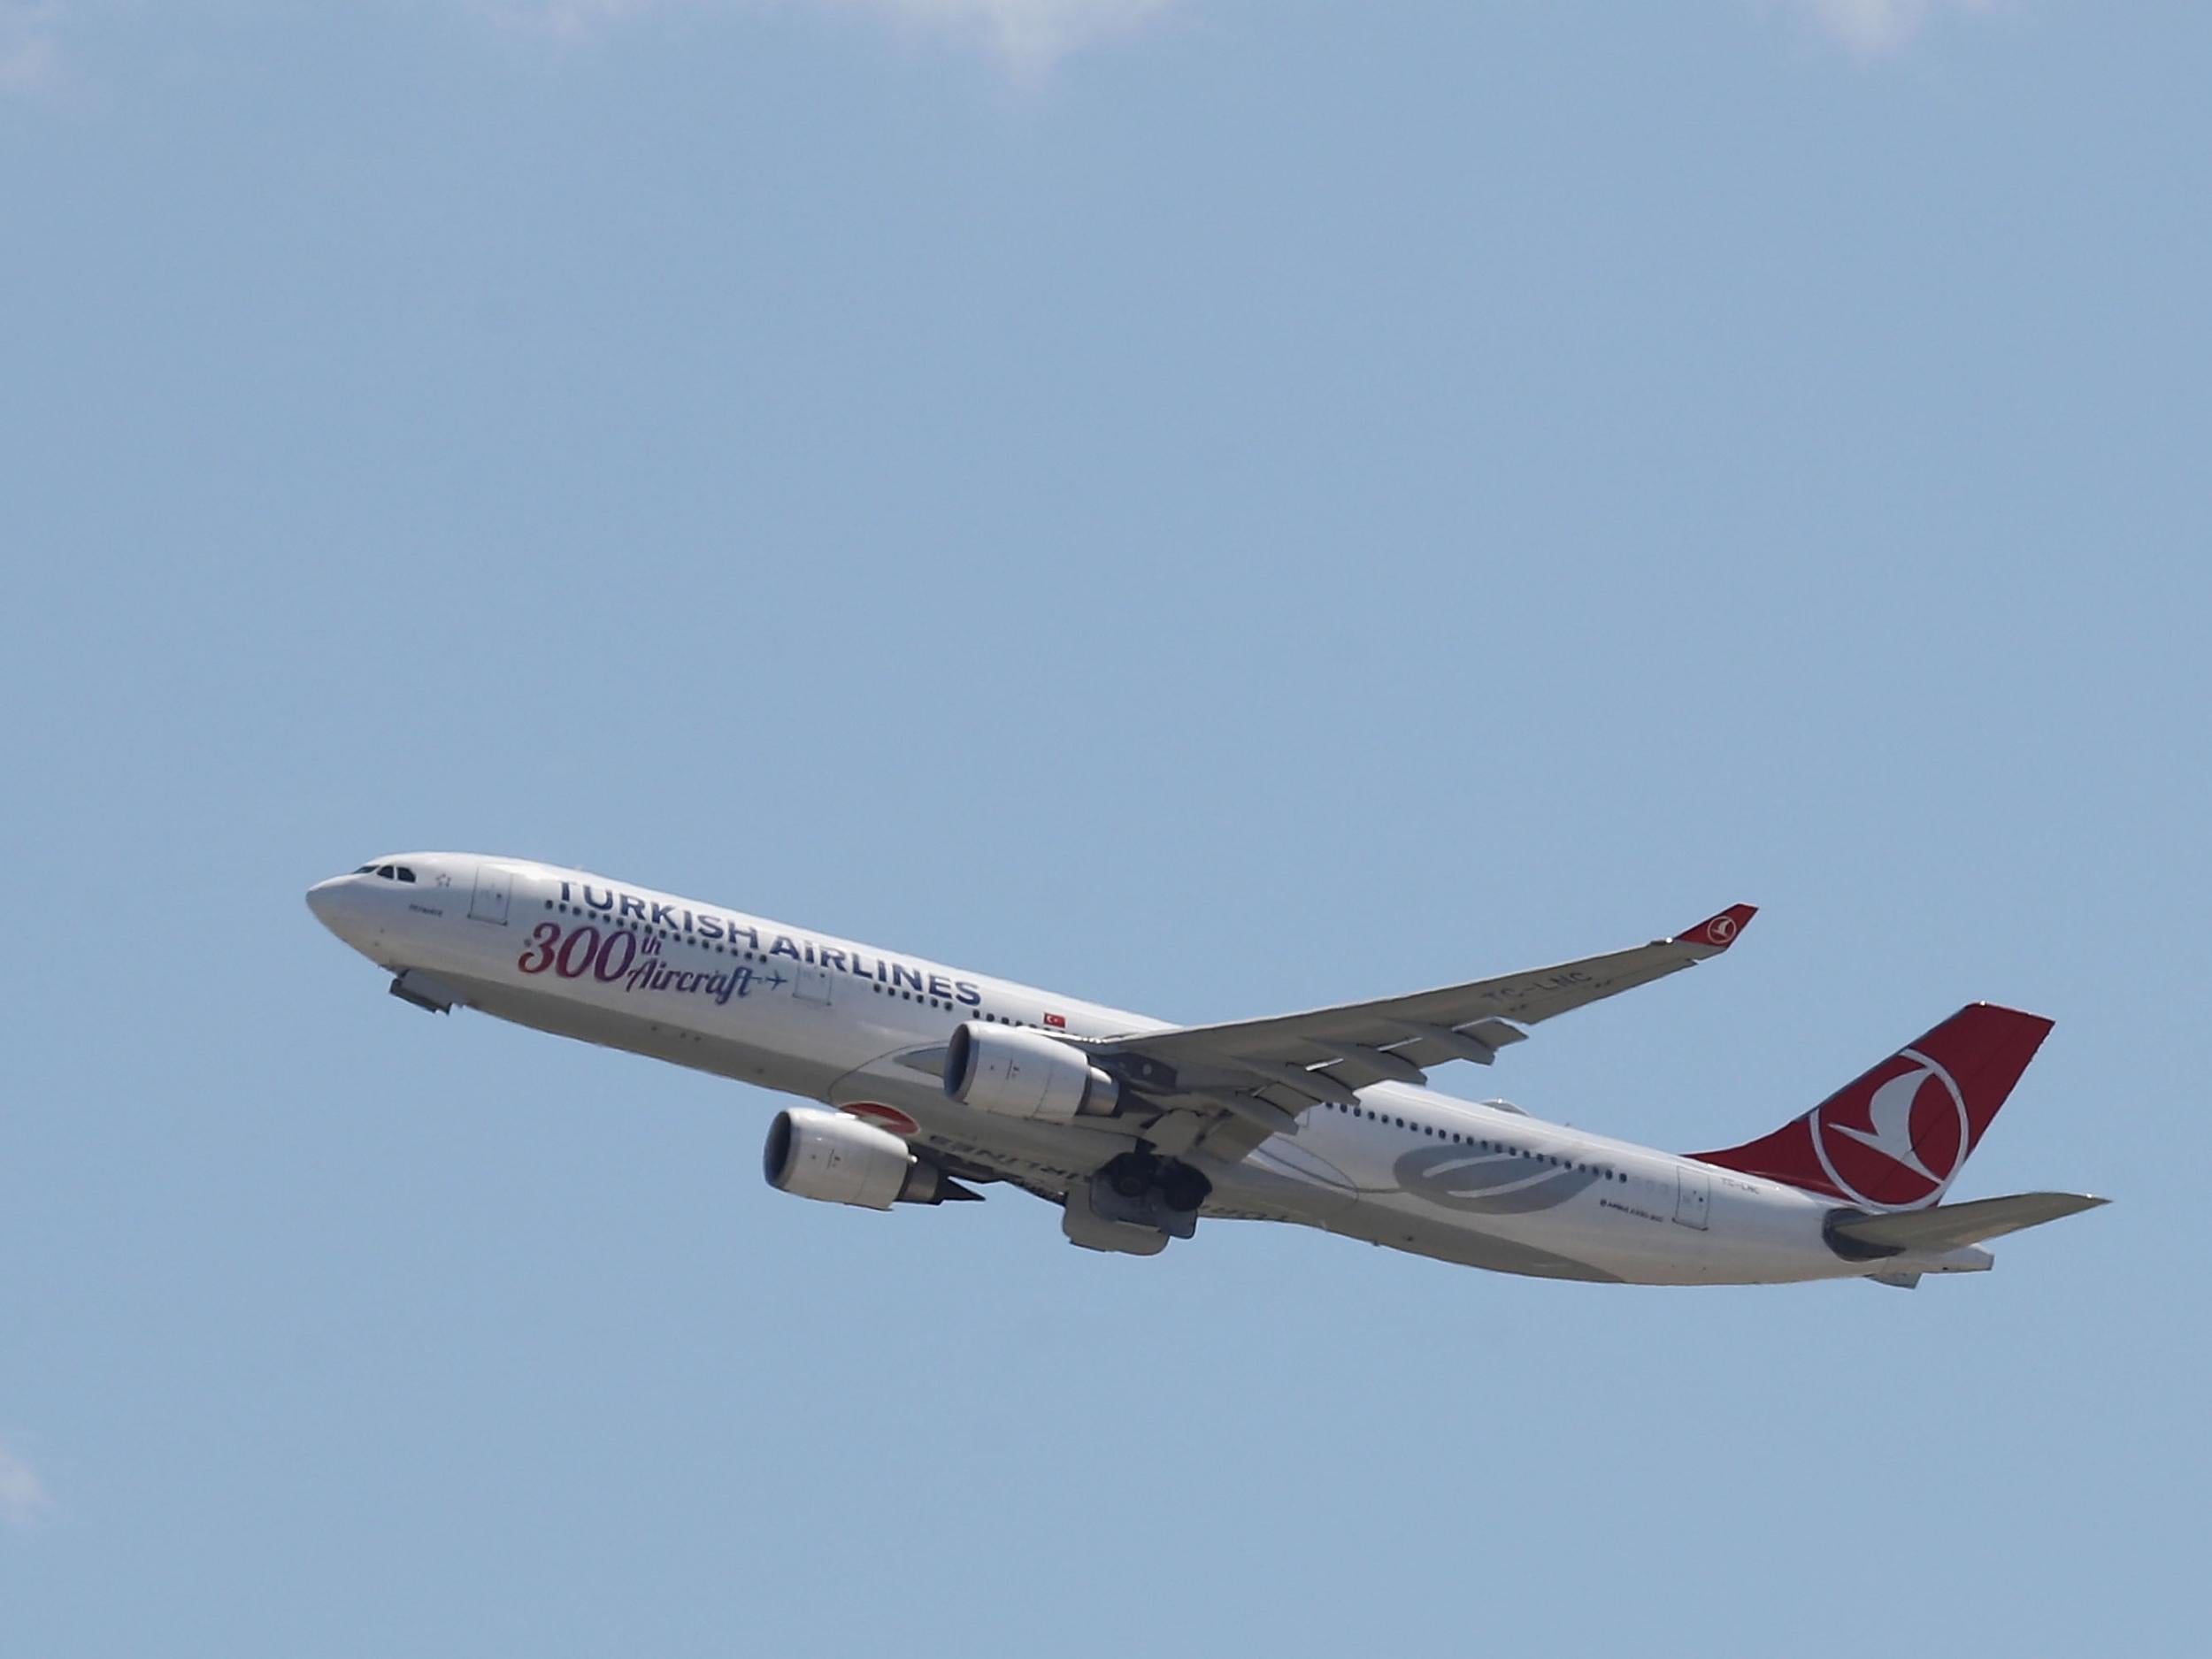 A Turkish Airlines flight